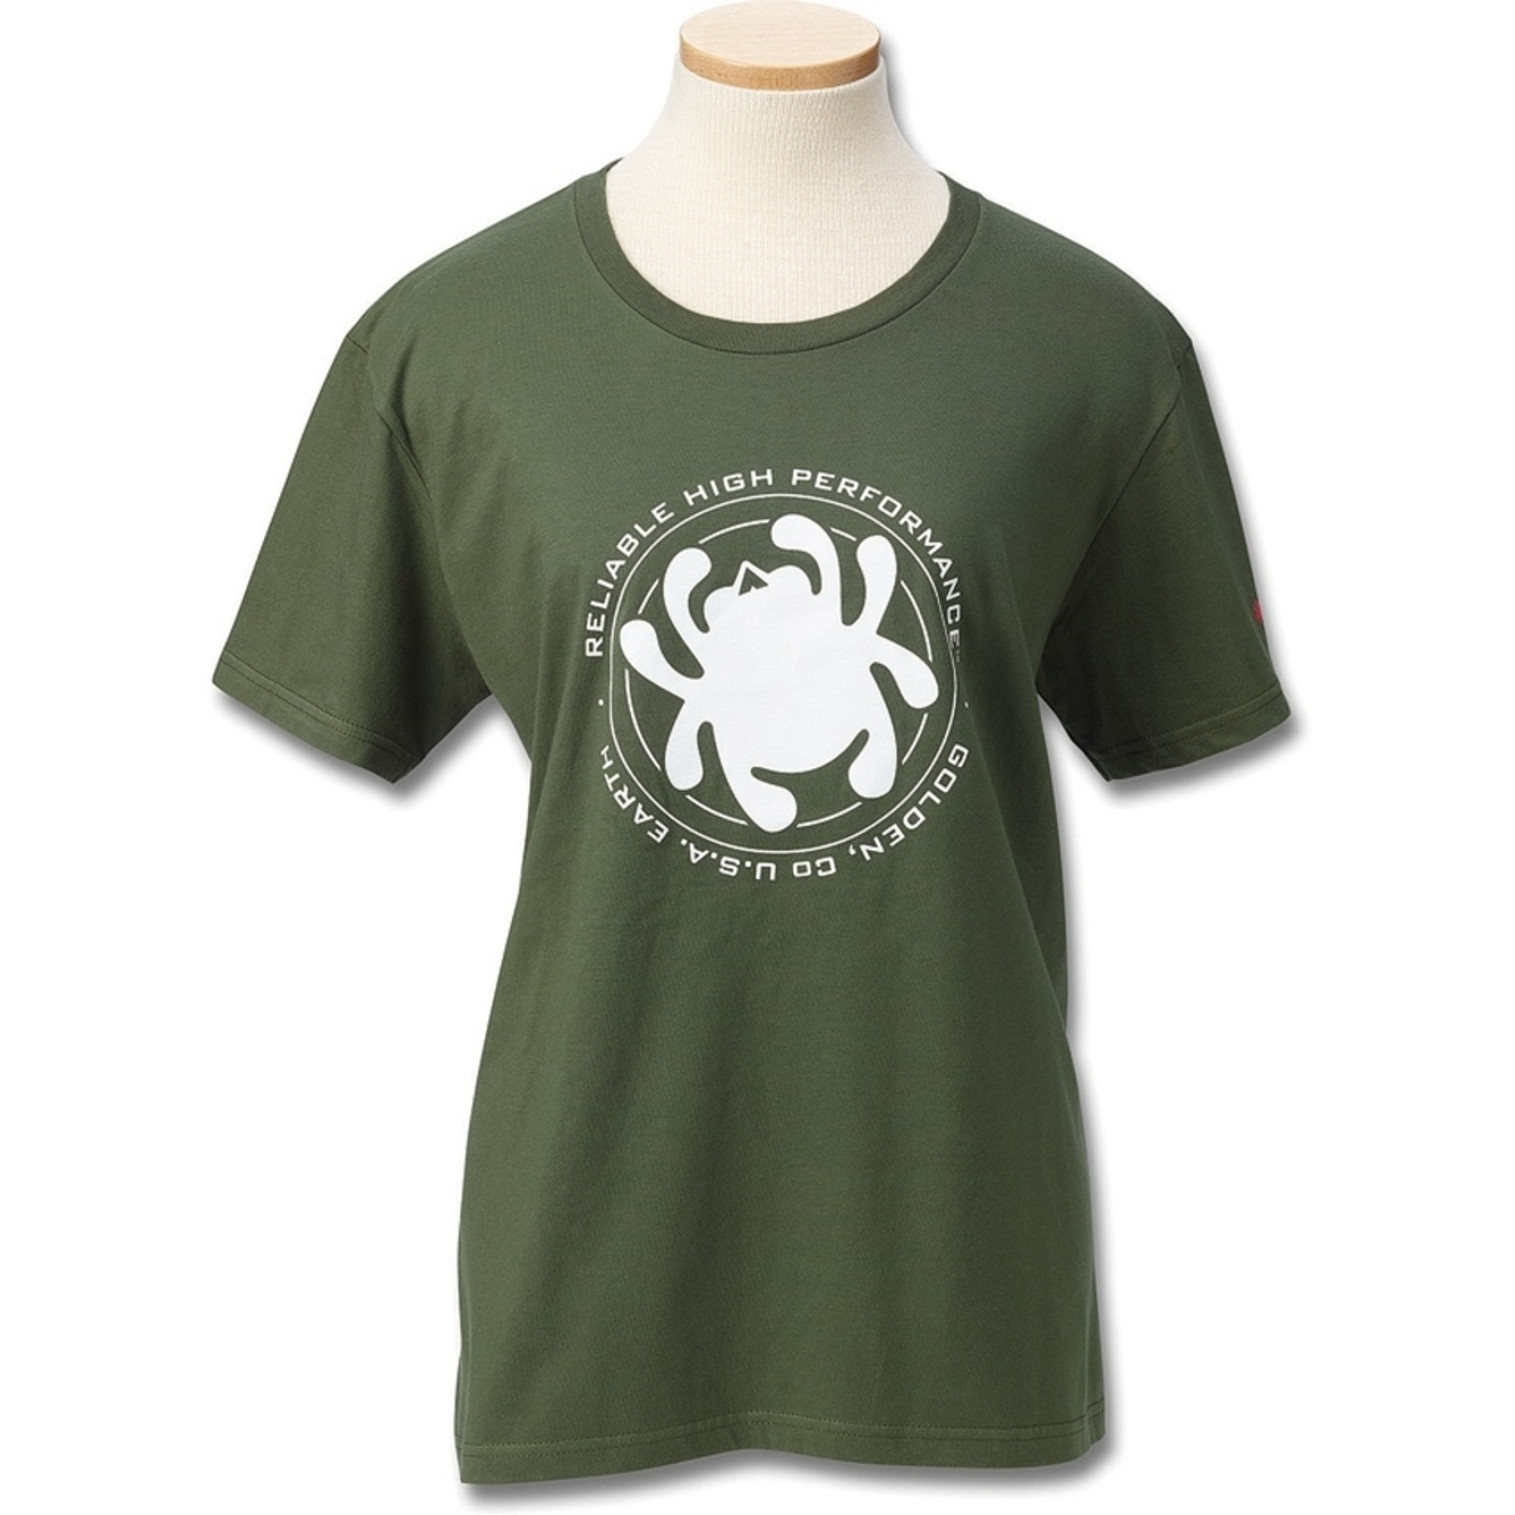 Womens T-Shirt Green Bug S